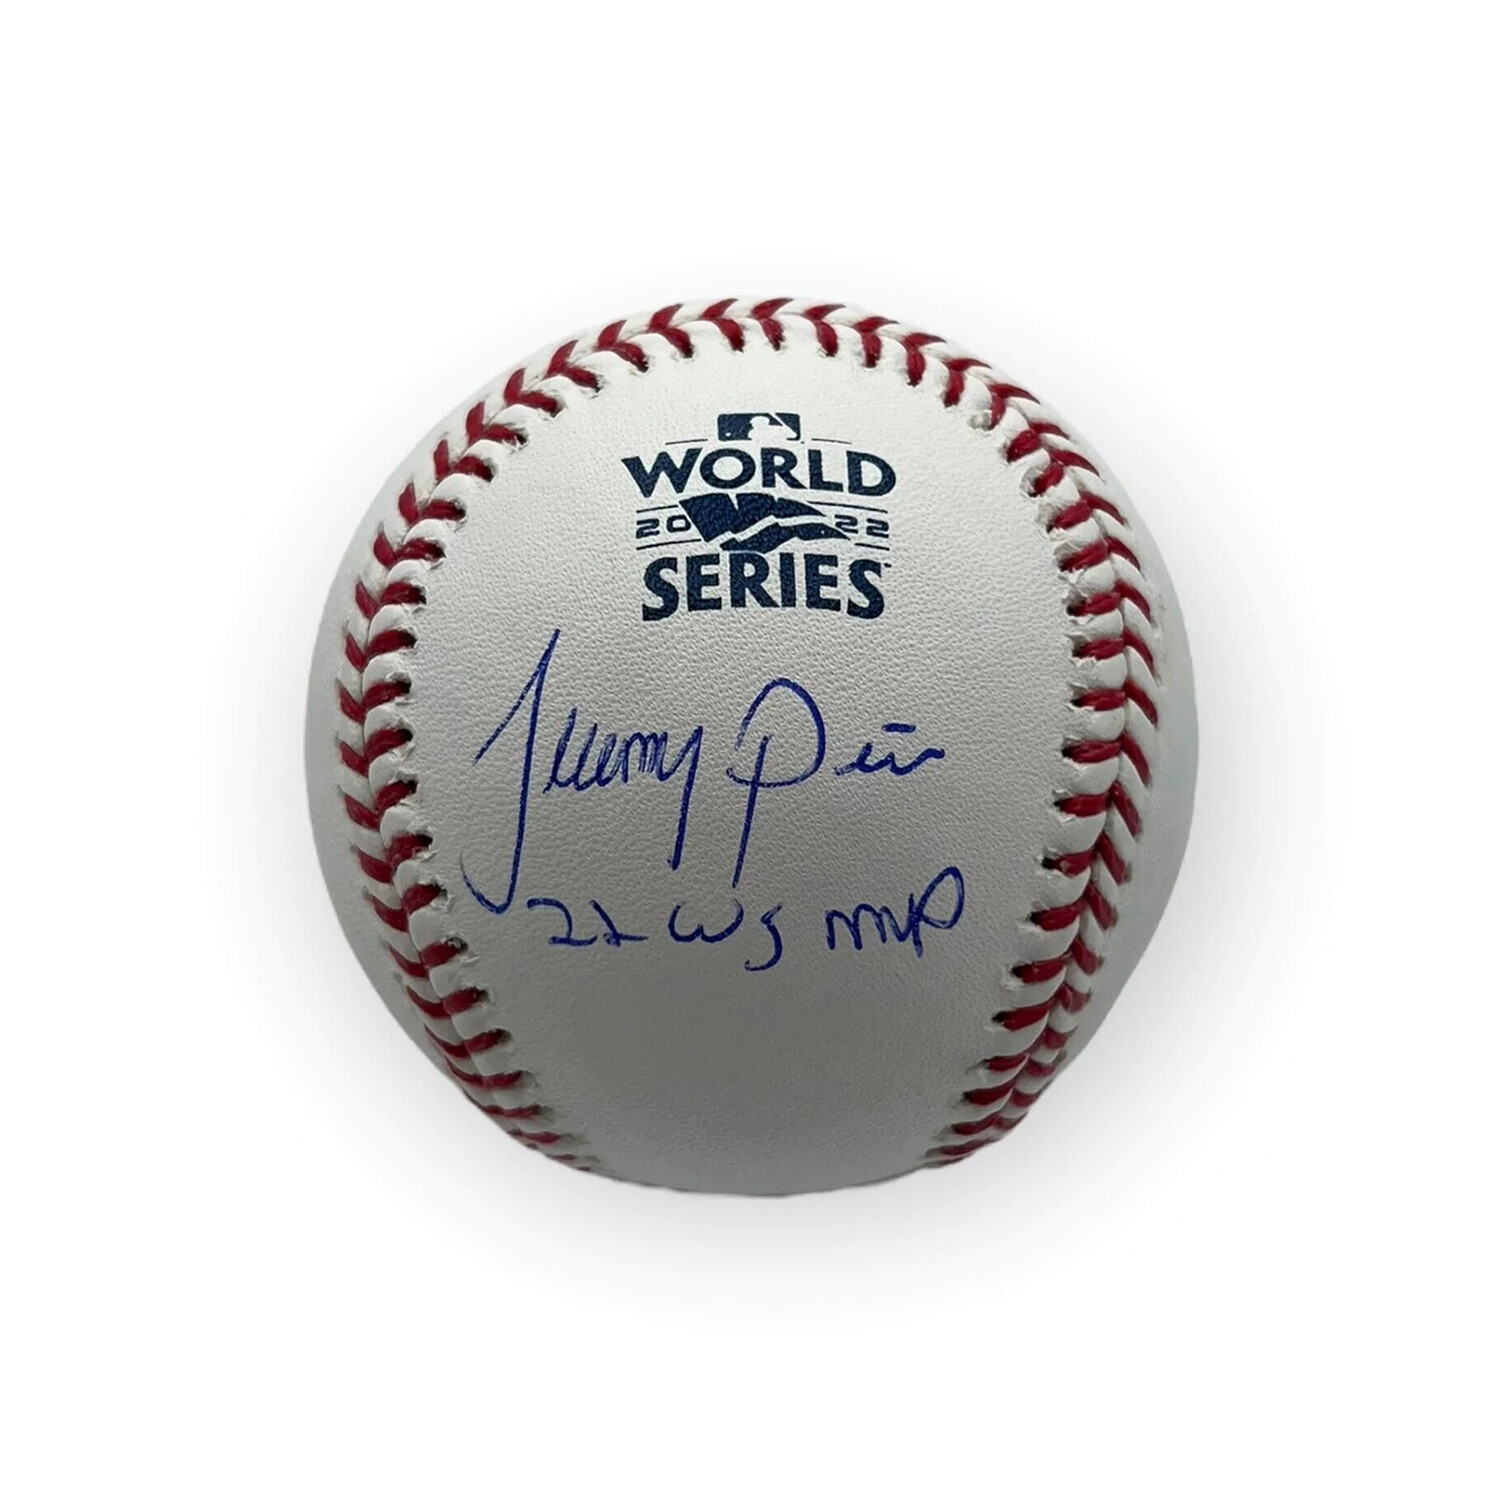 Jeremy Pena Autographed Signed Houston Astros World Series MVP